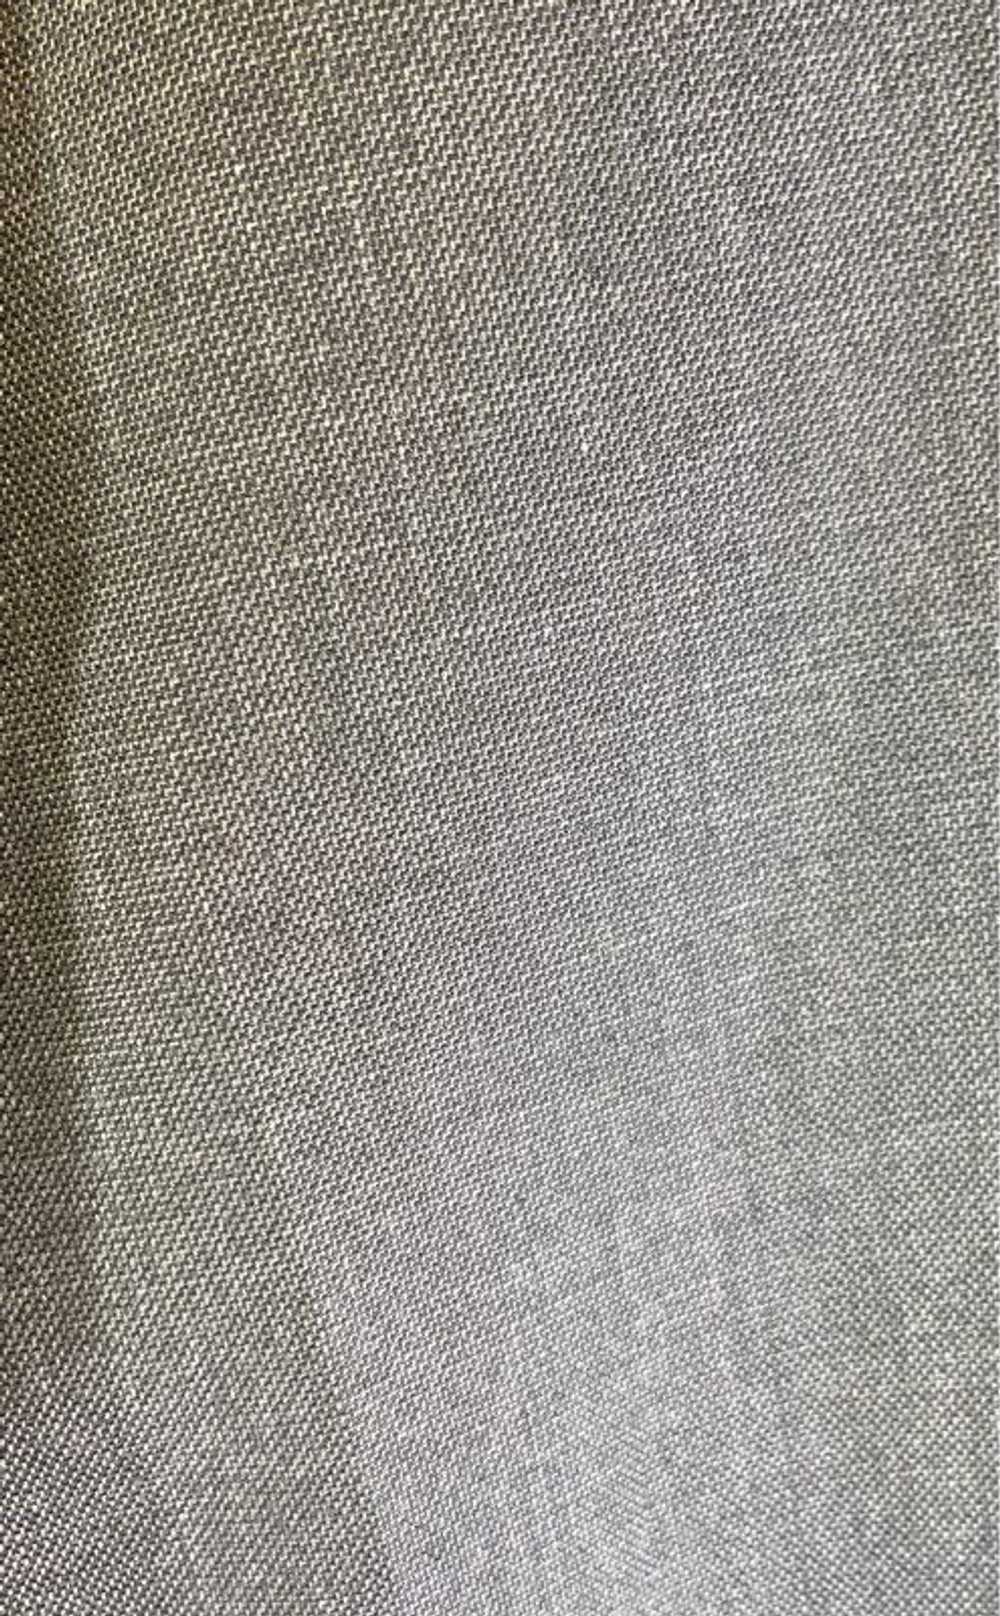 J Ferrar Gray Pants - Size X Small - image 4